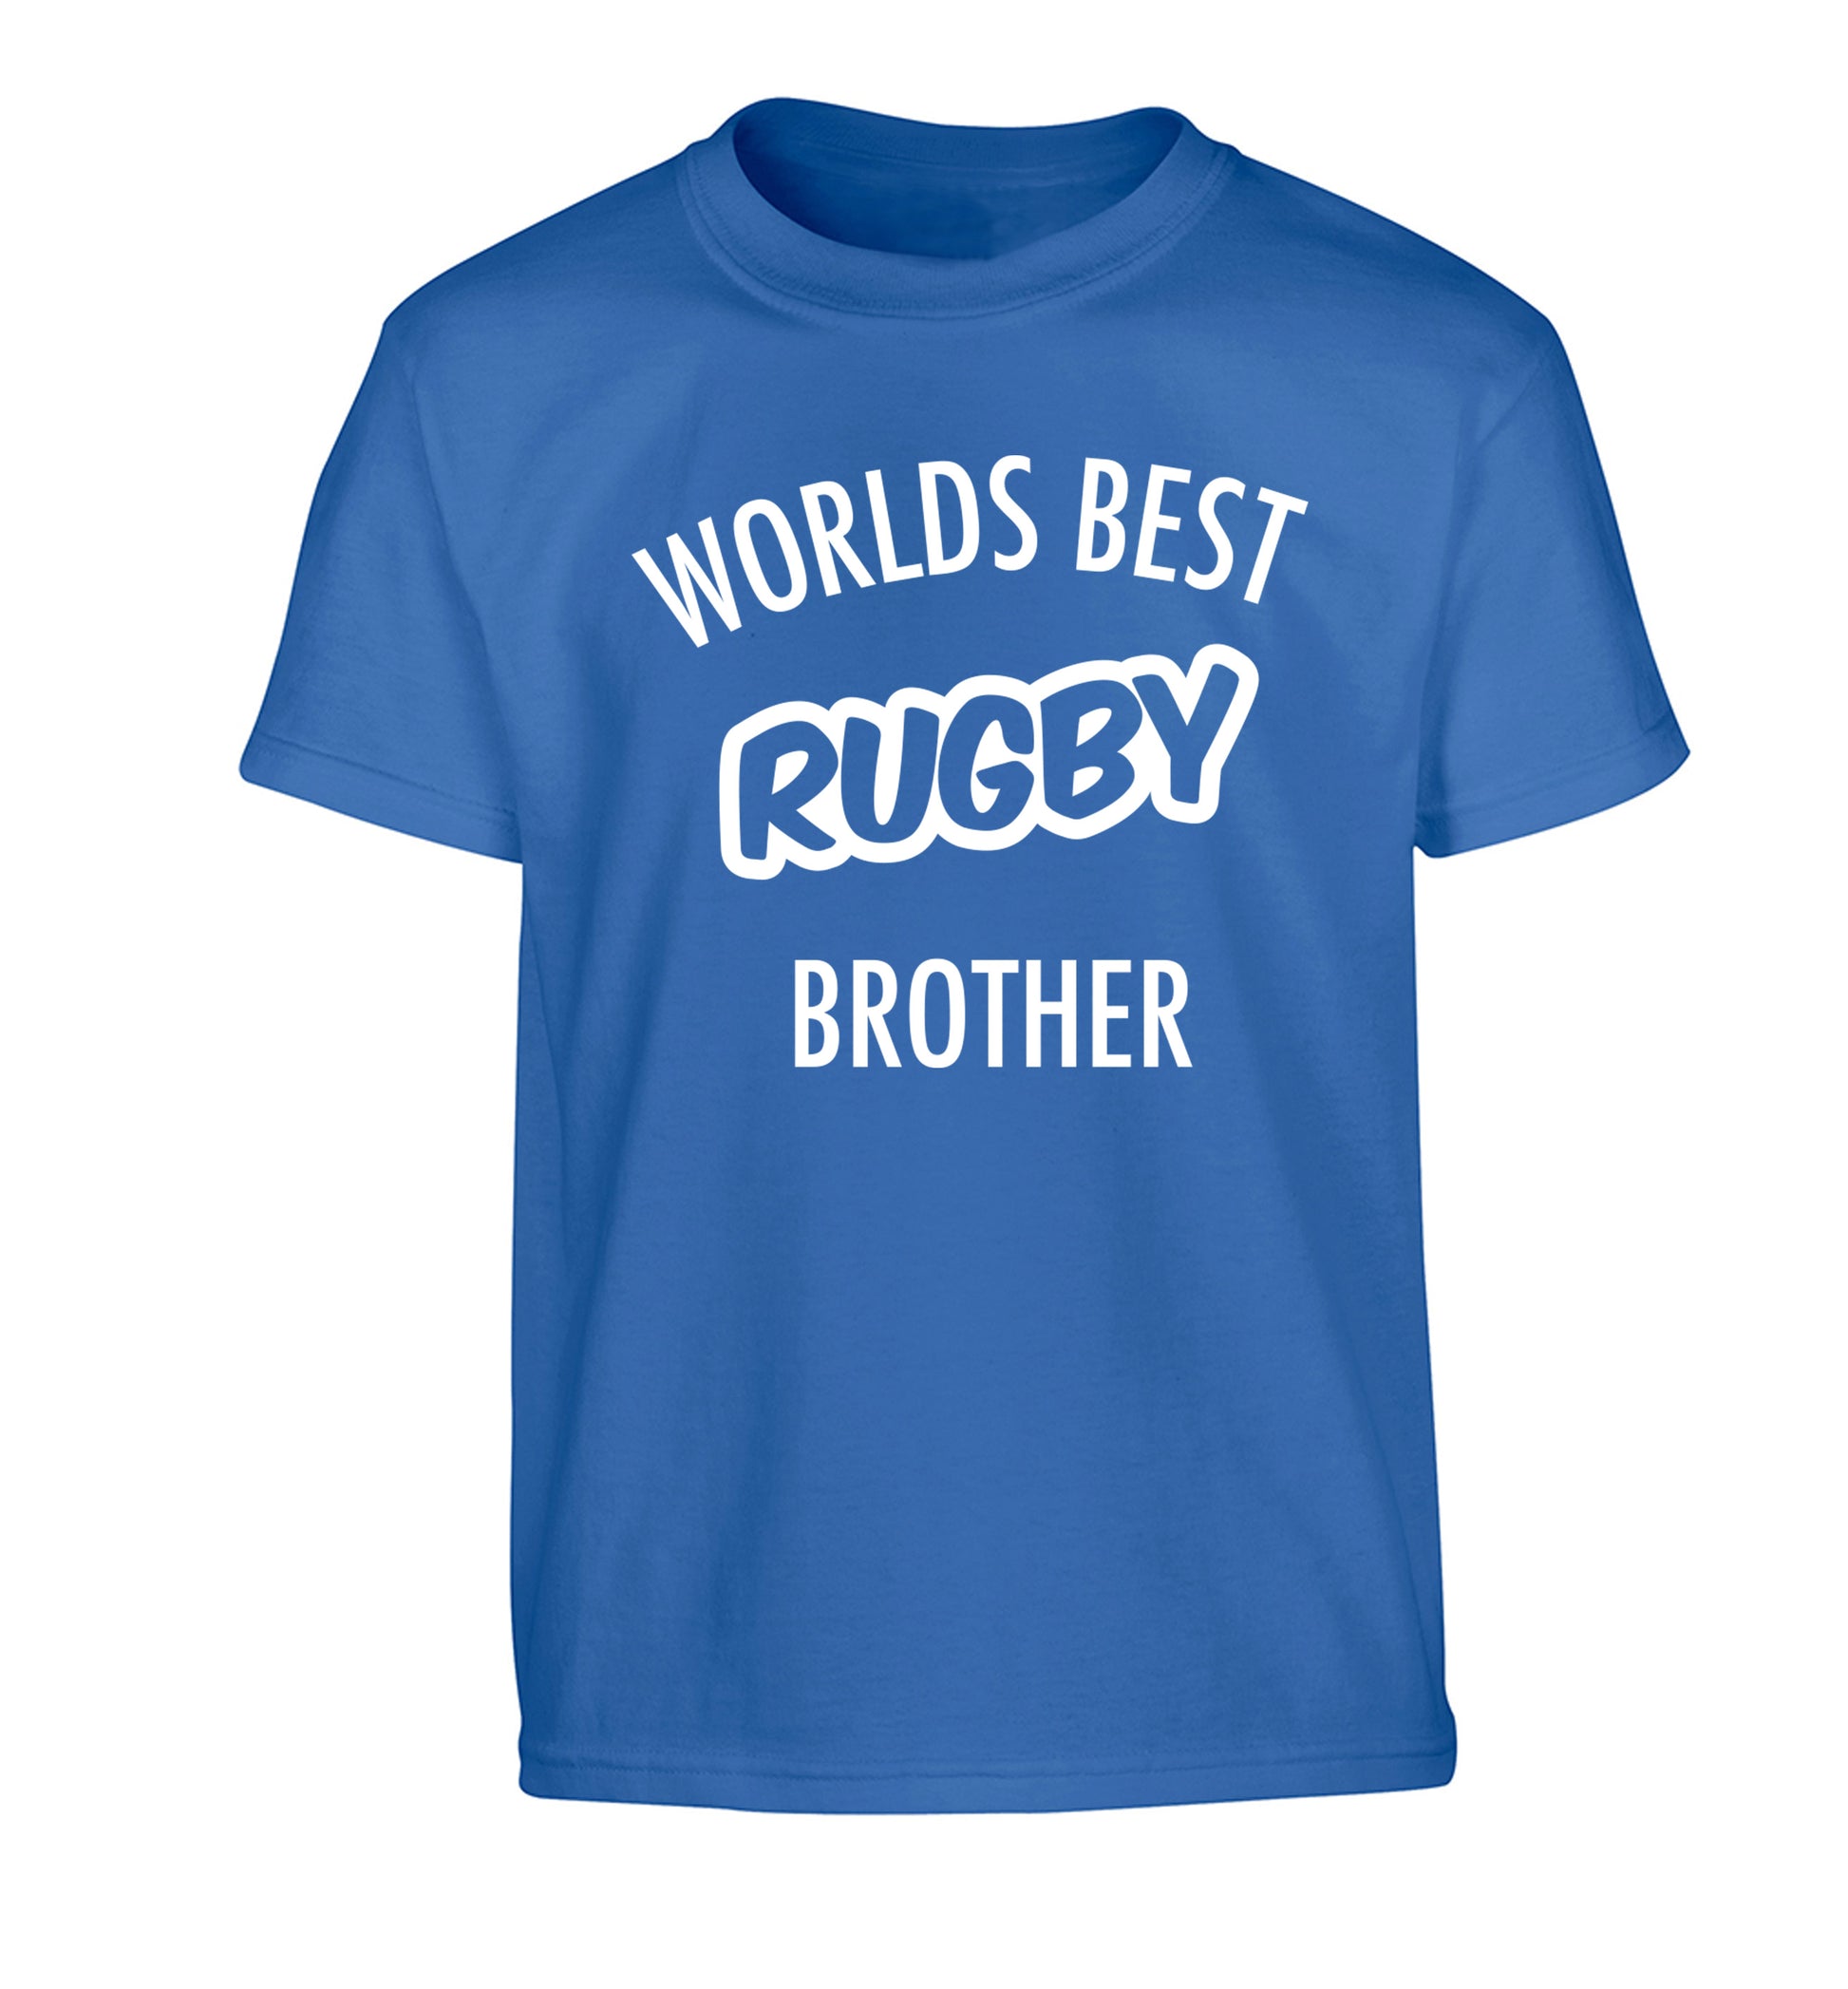 Worlds best rugby brother Children's blue Tshirt 12-13 Years